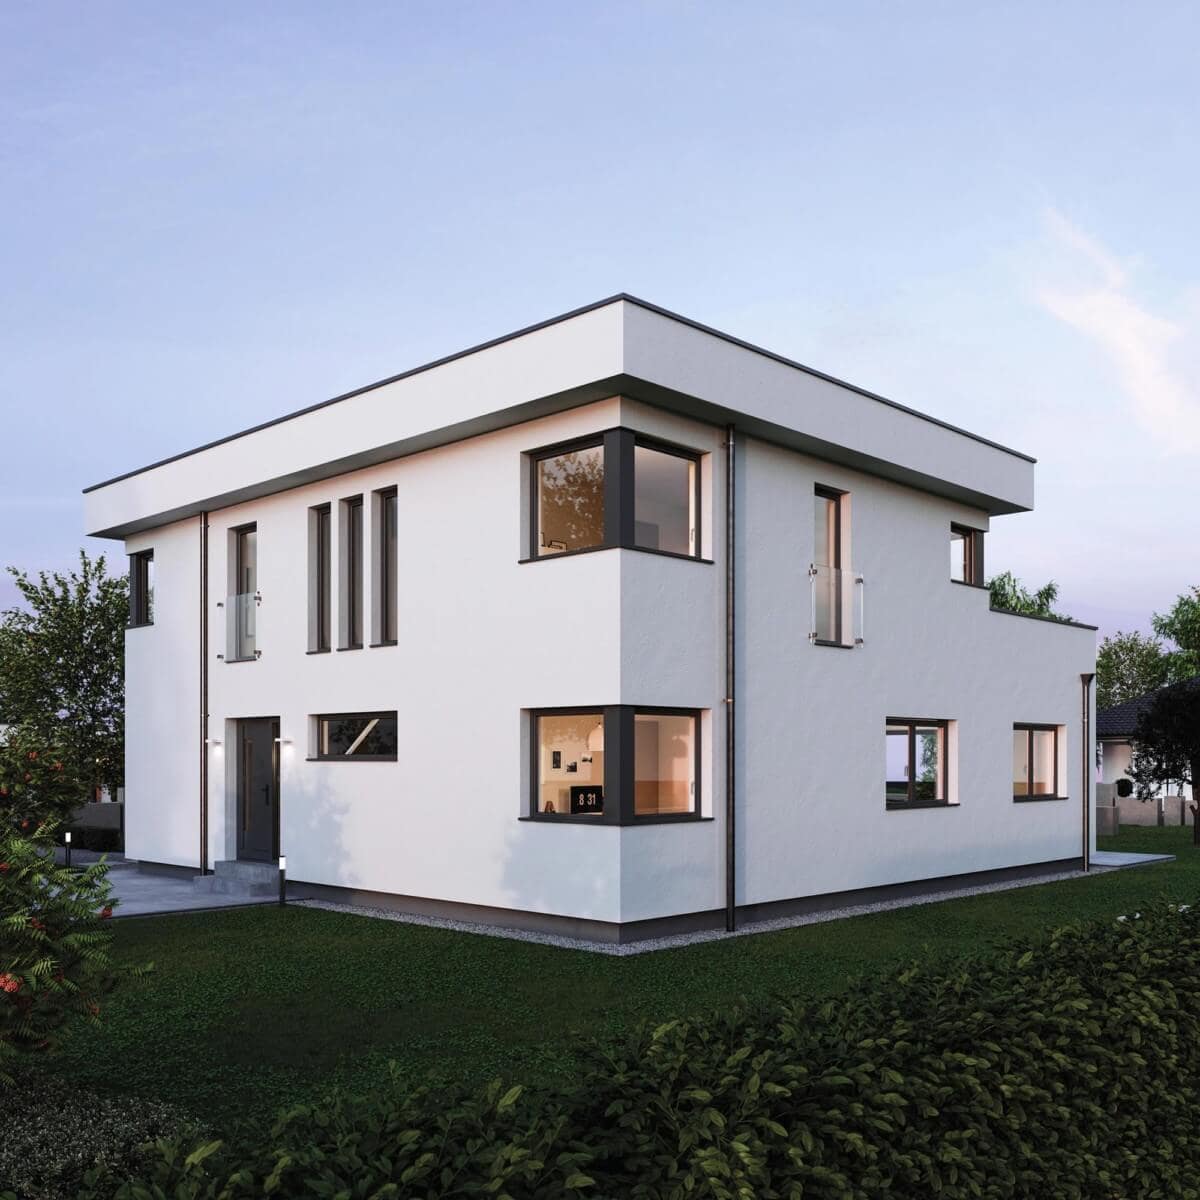 Einfamilienhaus Neubau modern im Bauhausstil mit Flachdach & Putz Fassade weiss - Haus Design Ideen Fertighaus ELK Haus 186 - HausbauDirekt.de